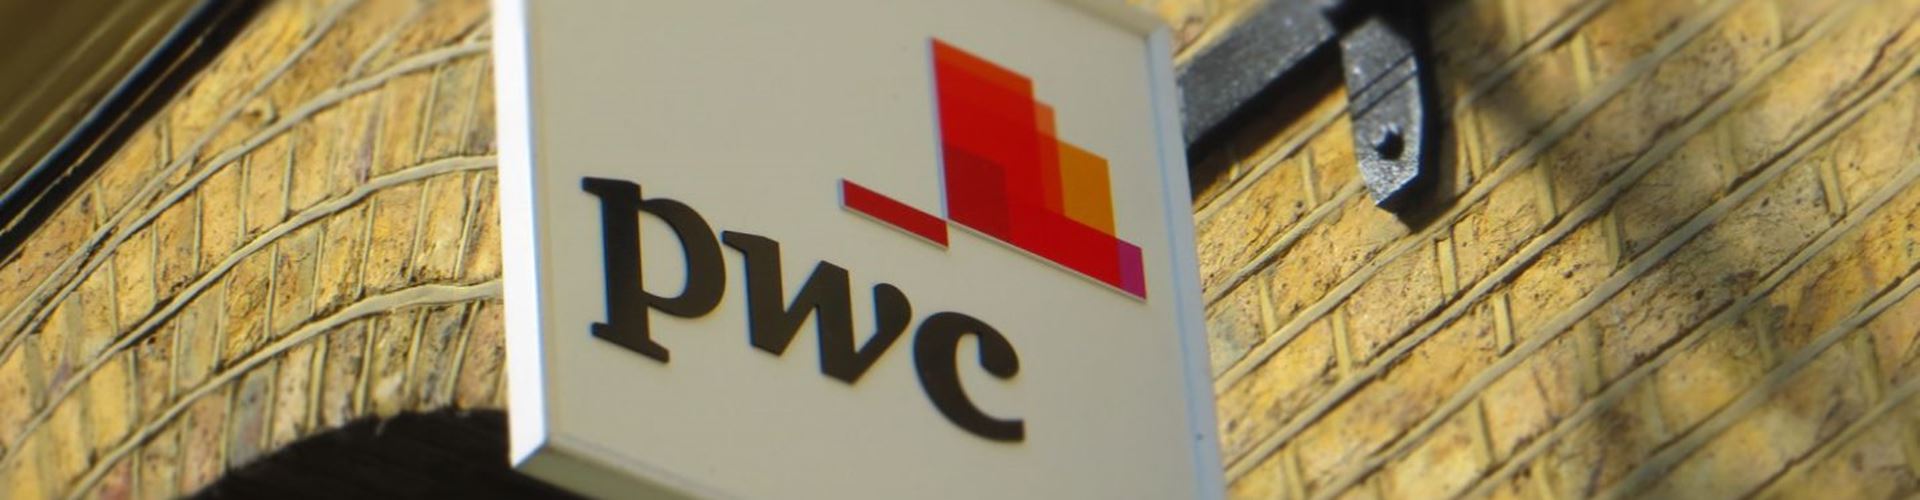 PricewaterhouseCoopers revenue grows to £2.8 billion